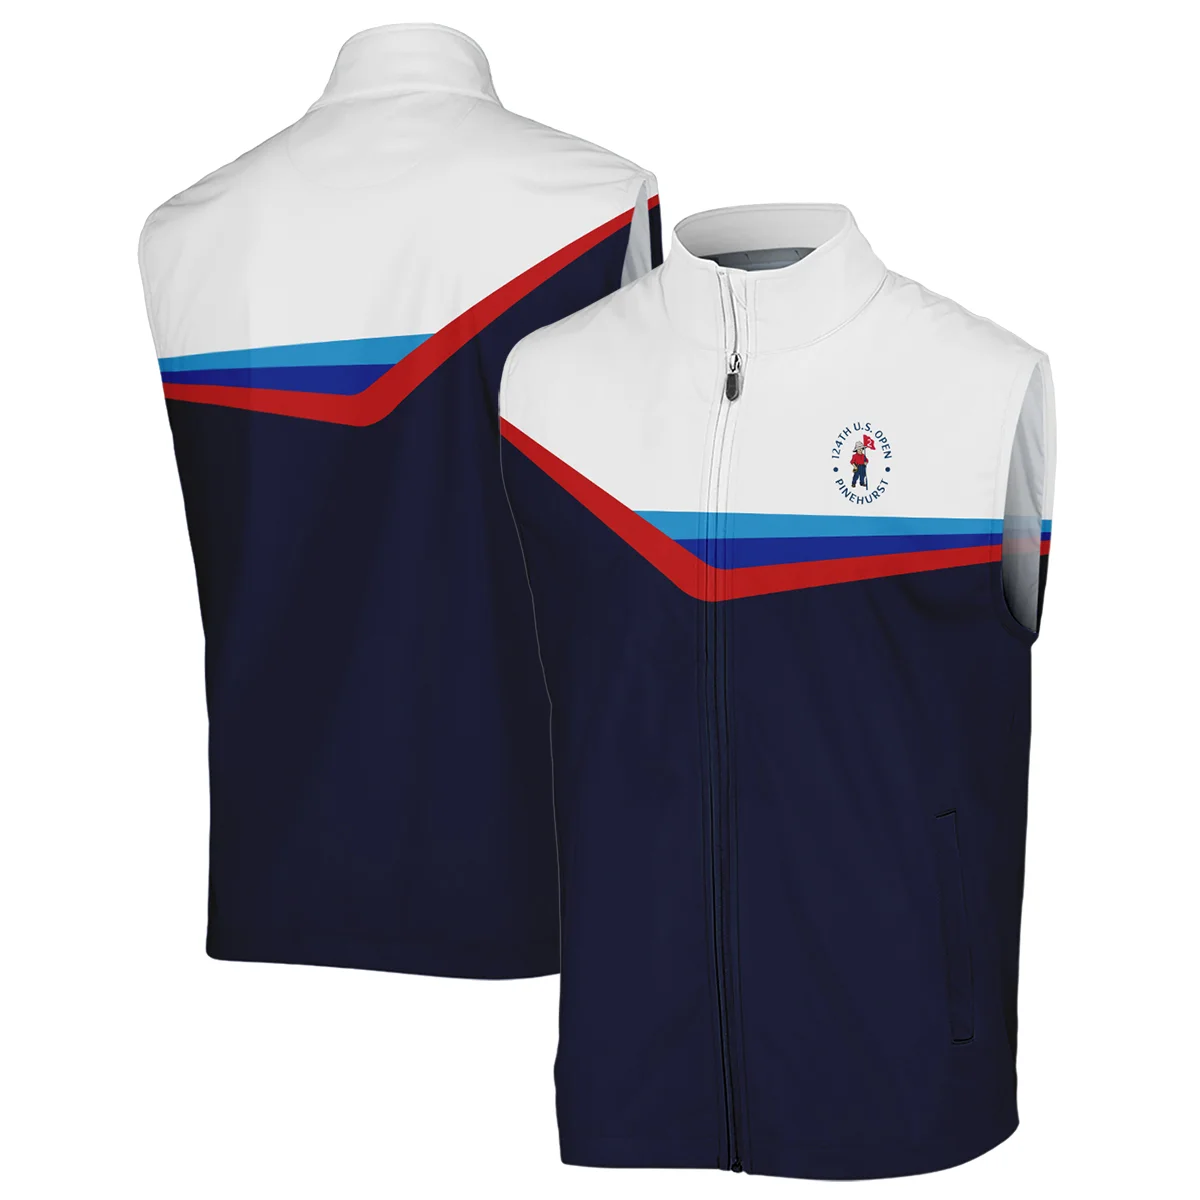 124th U.S. Open Pinehurst Golf Blue Red Line White Pattern Ping Polo Shirt Mandarin Collar Polo Shirt